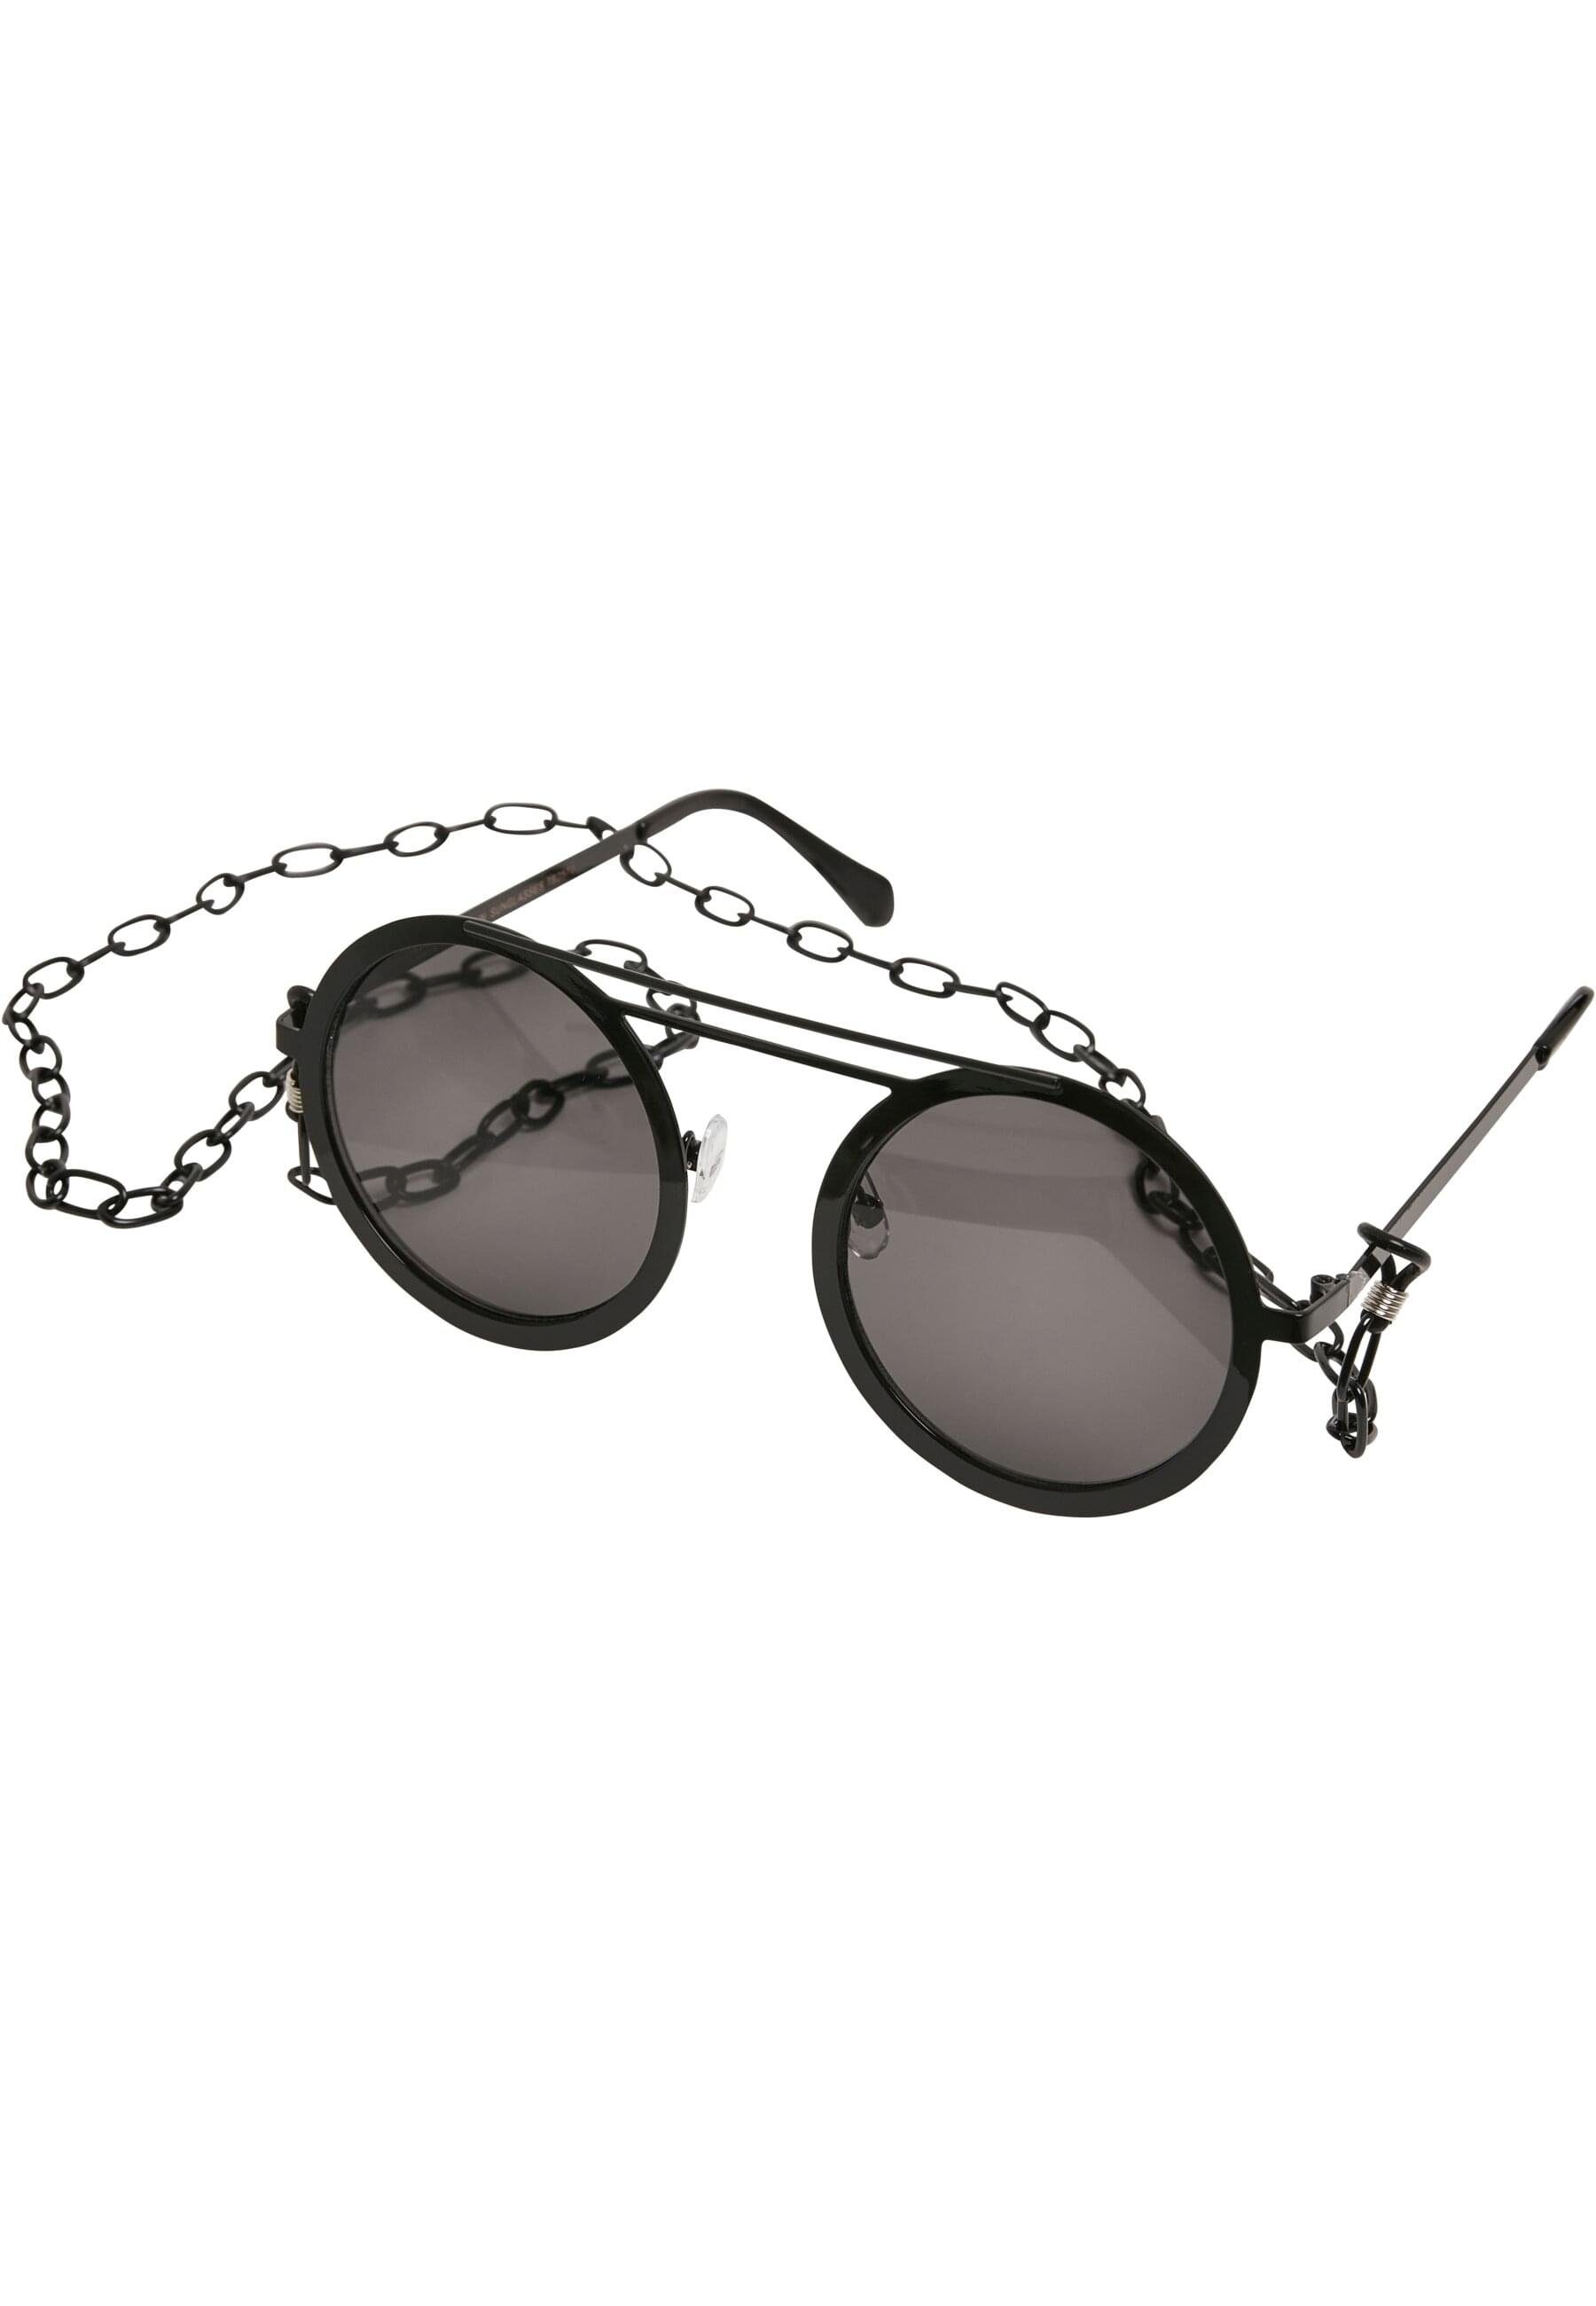 Sonnenbrille black/black Sunglasses CLASSICS Unisex Chain 104 URBAN